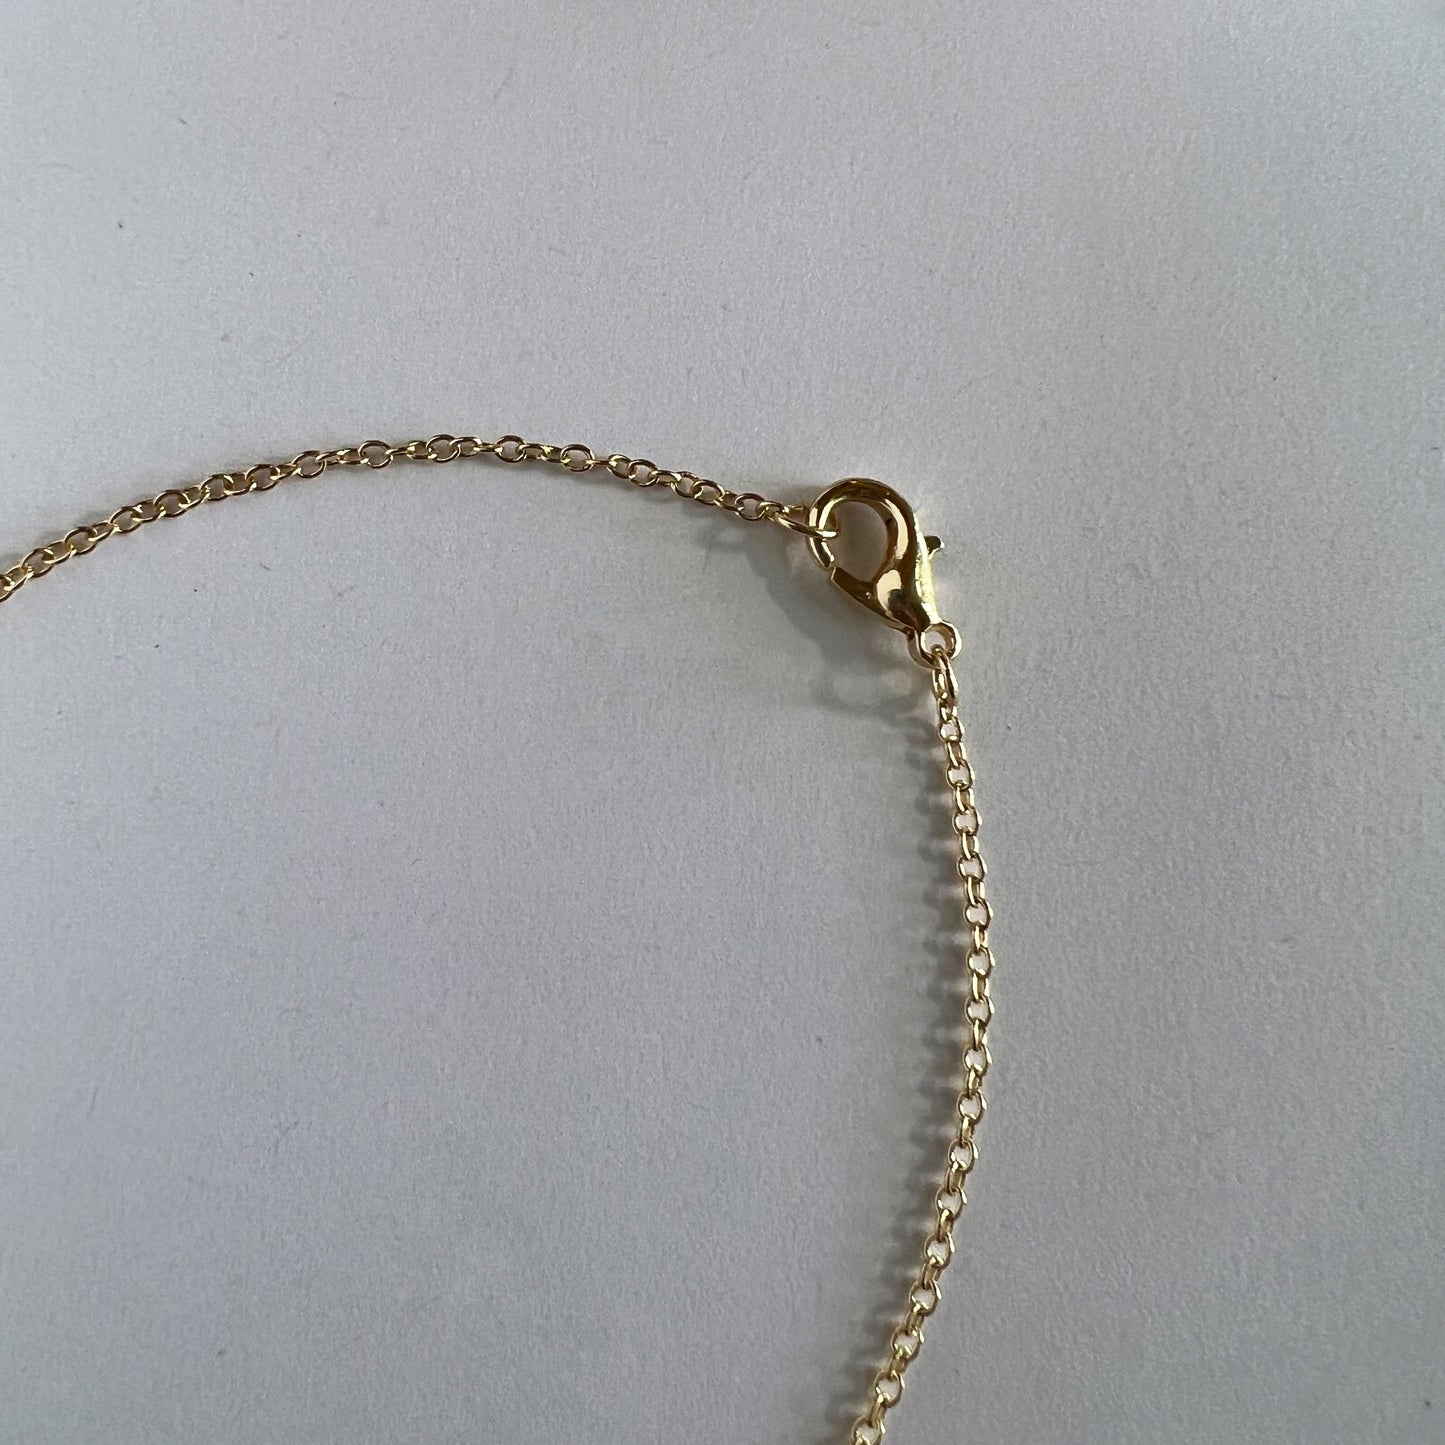 Quartz Point Necklace, Brass Chain